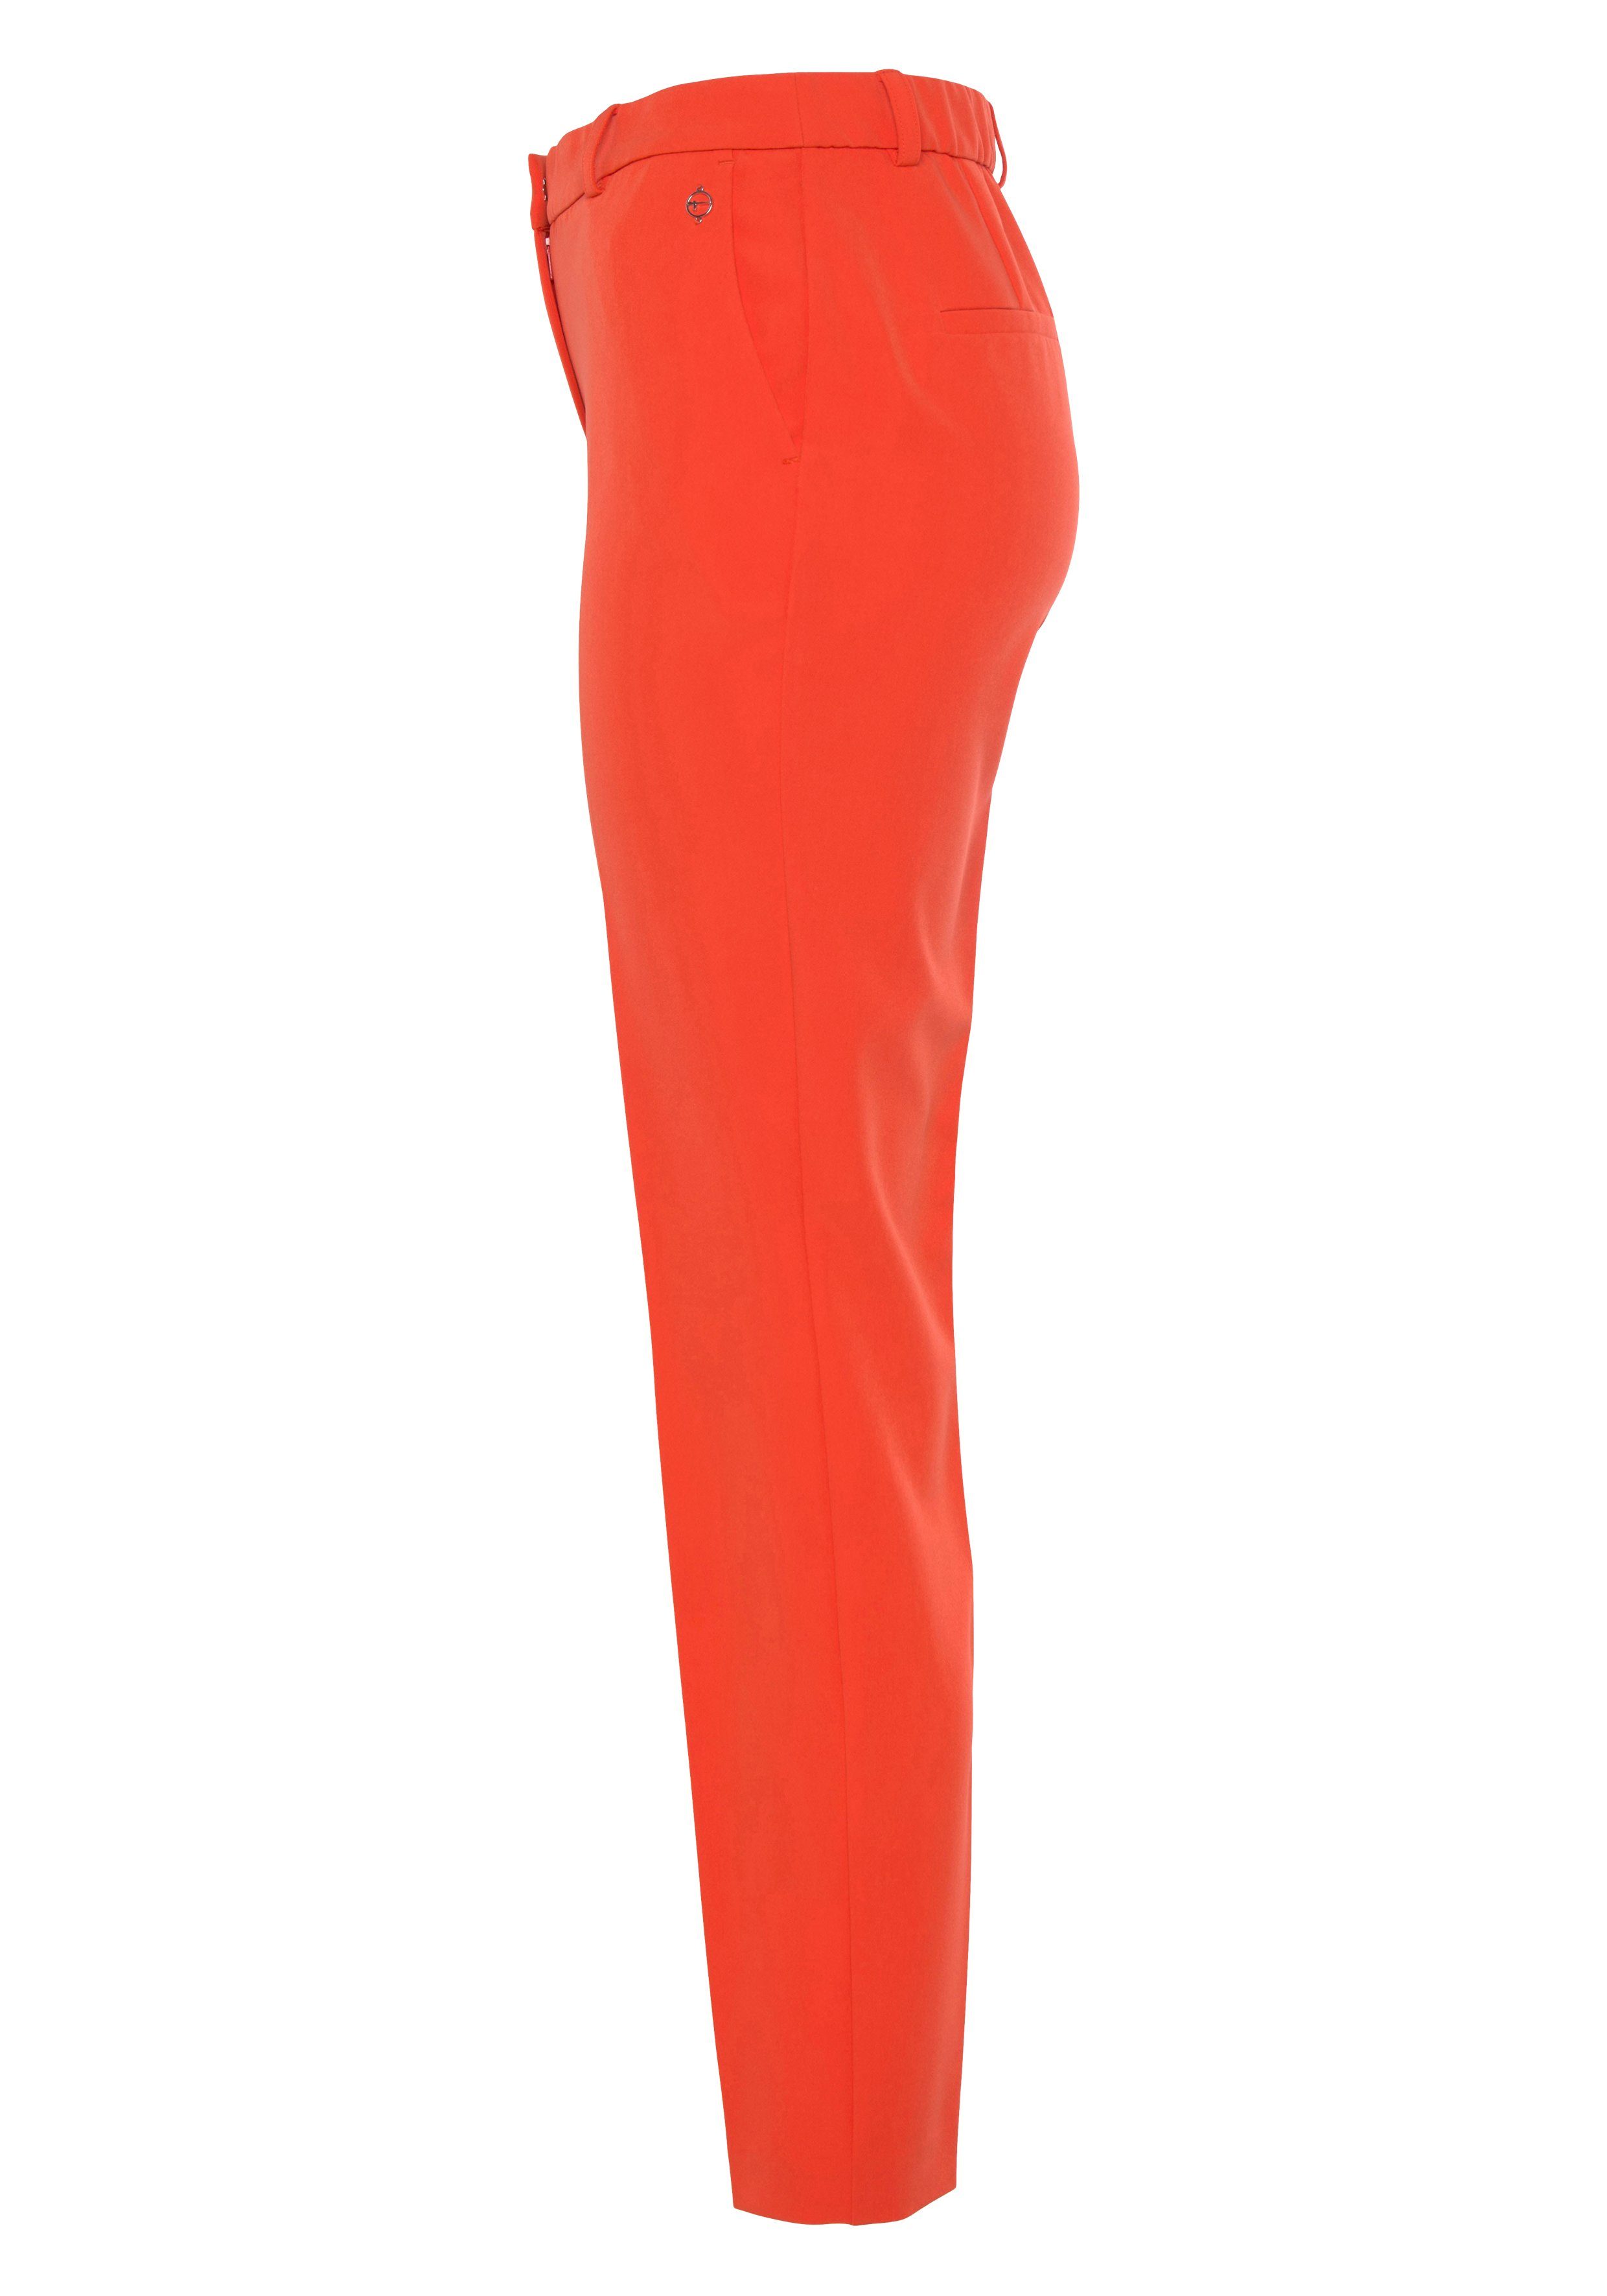 Anzughose in Material) Trendfarben orange nachhaltigem aus Tamaris (Hose